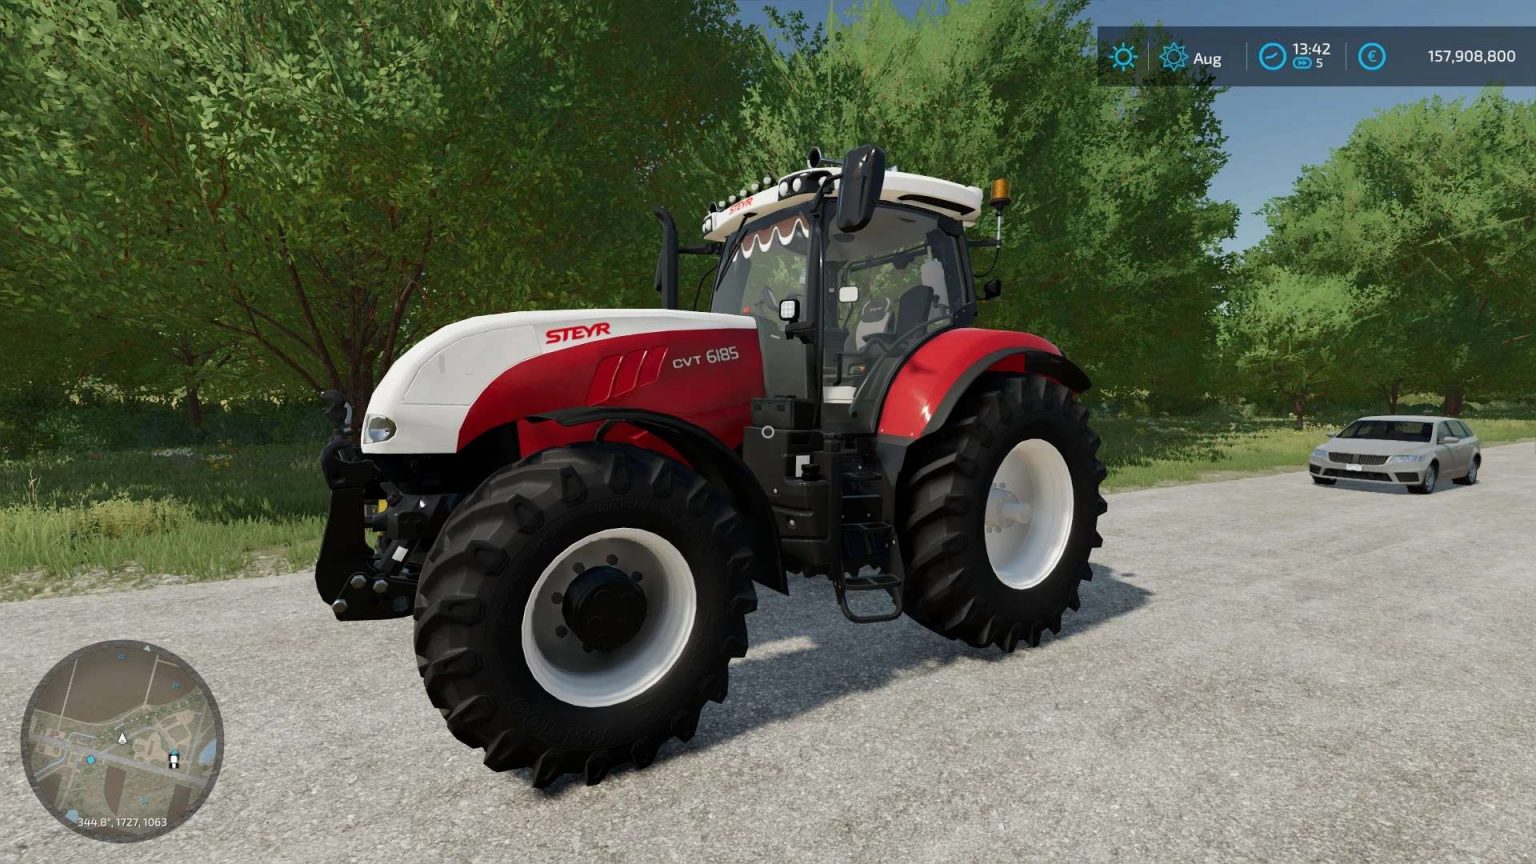 Steyr Cvt Edit V10 Fs22 Farming Simulator 22 Mod Fs22 Mod 2080